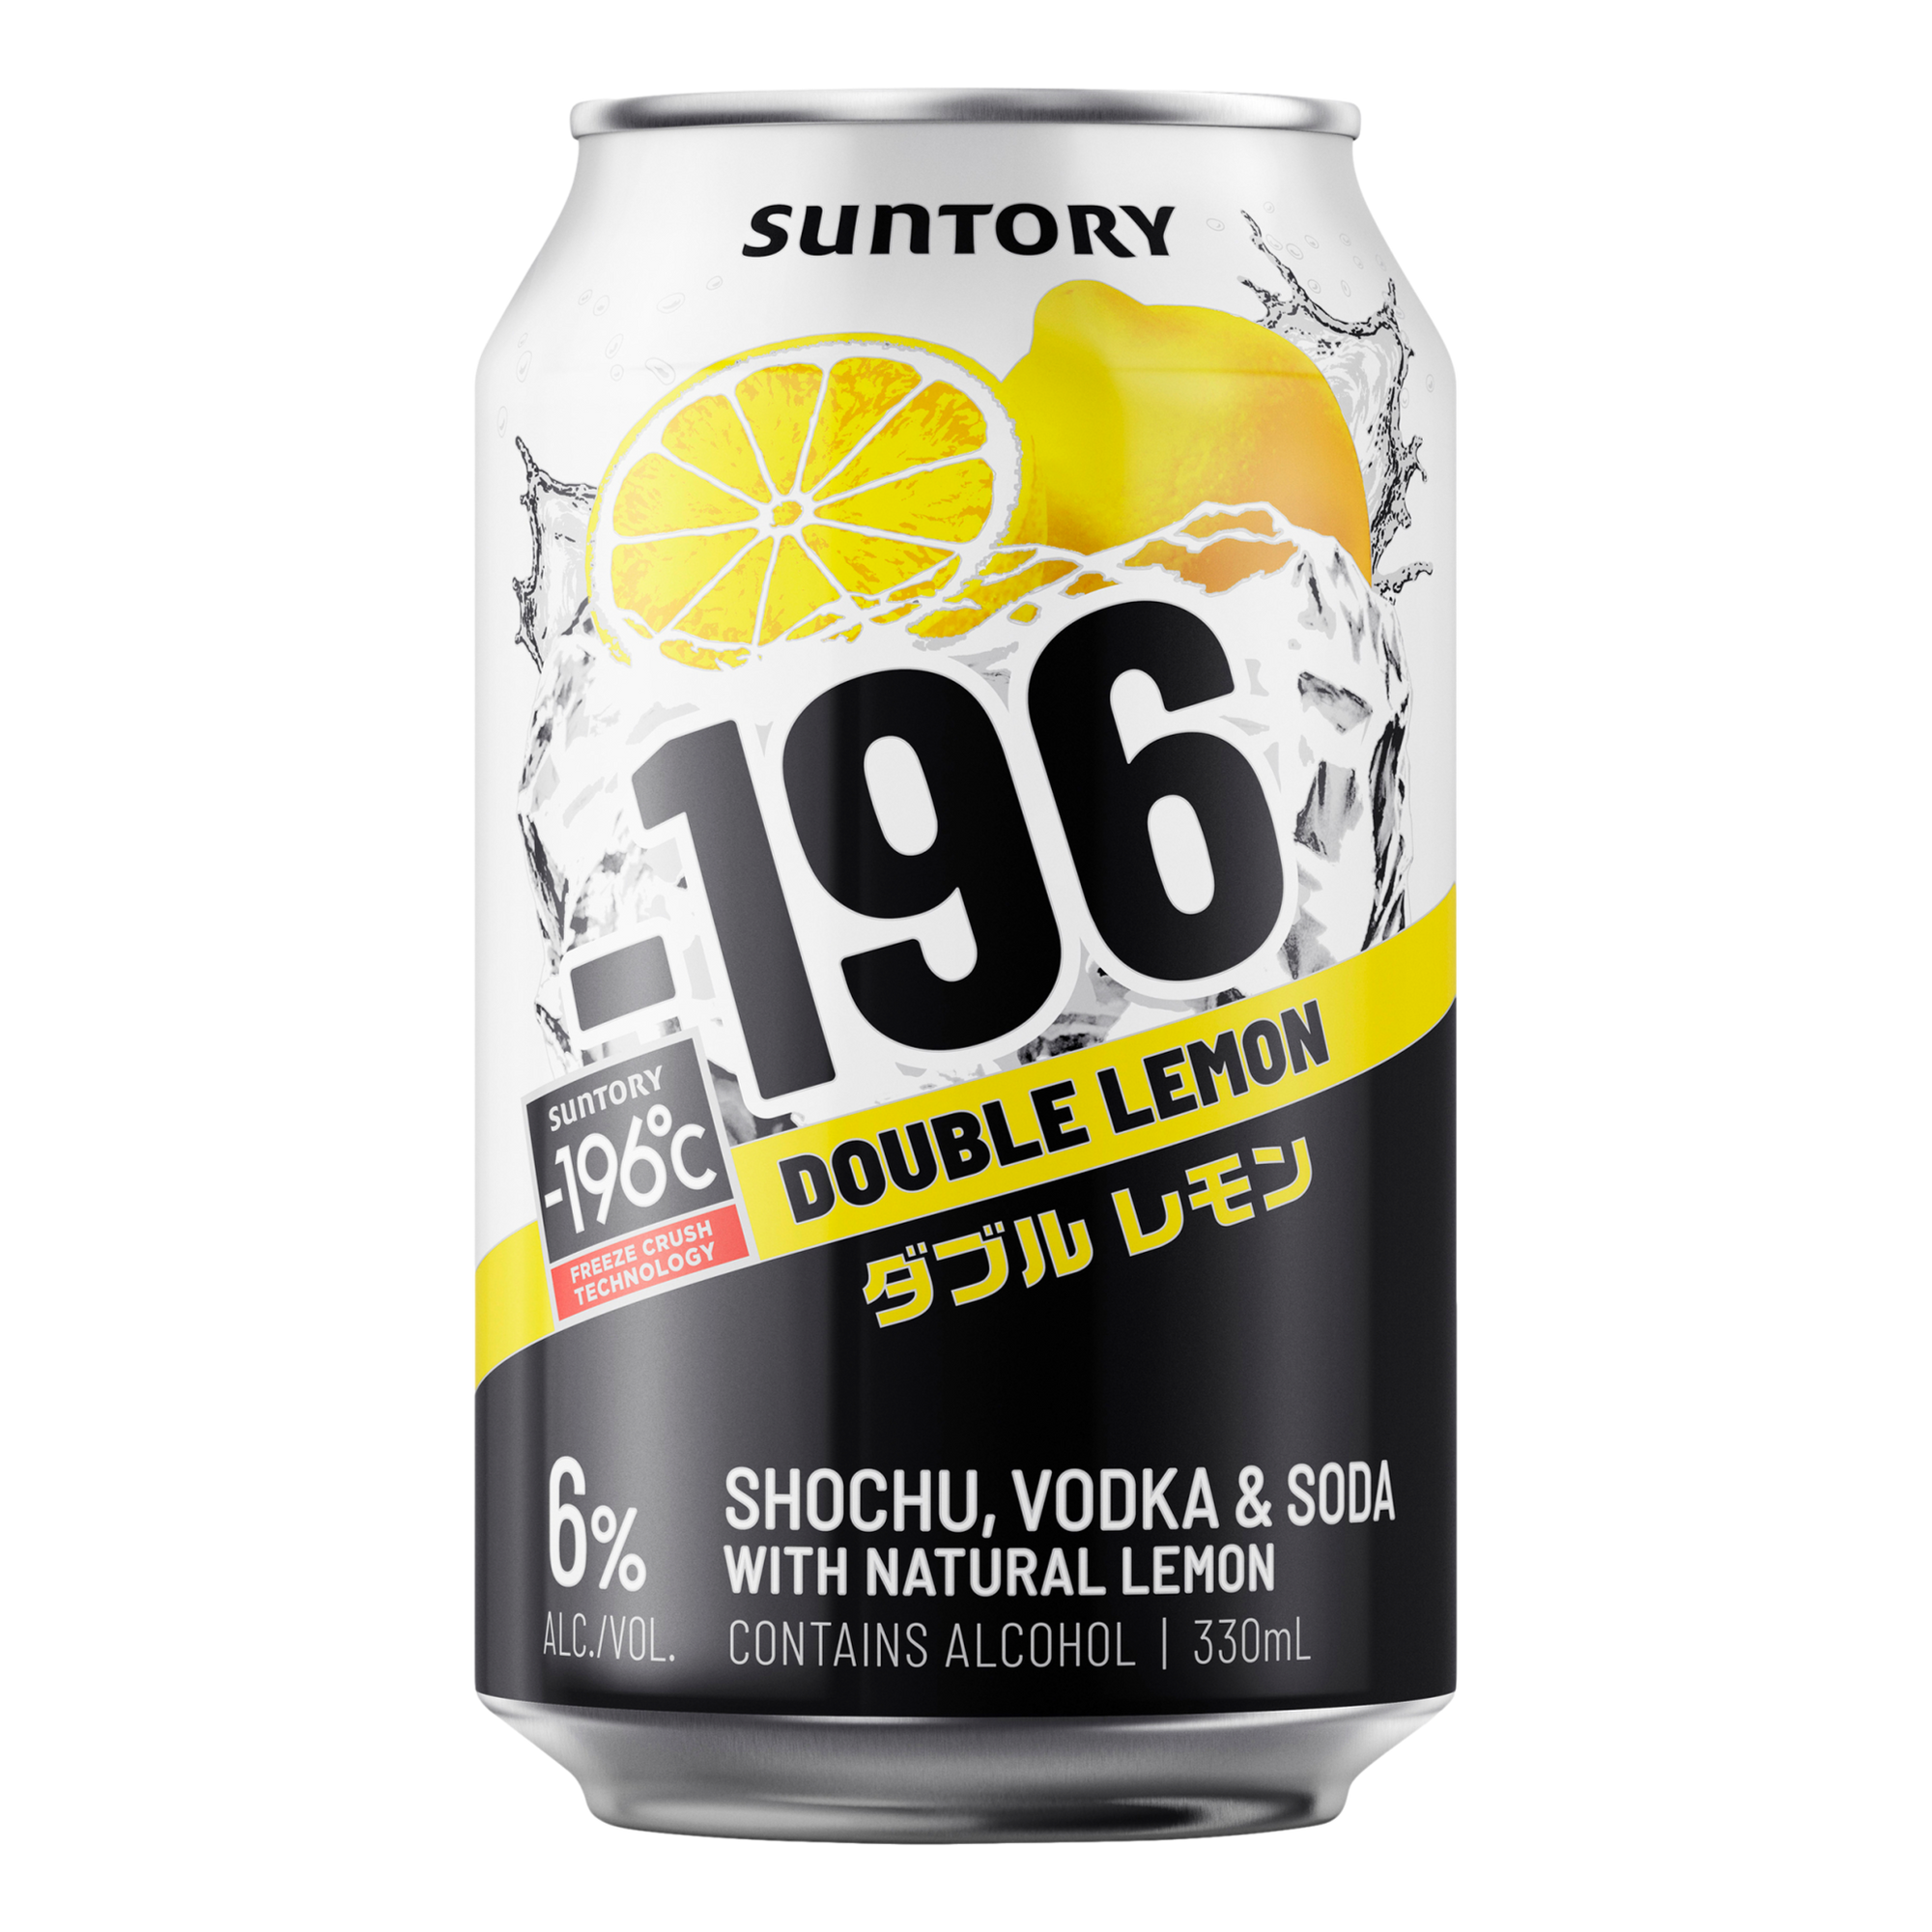 Suntory -196 Double Lemon Shochu Vodka Soda 330ml Can Single